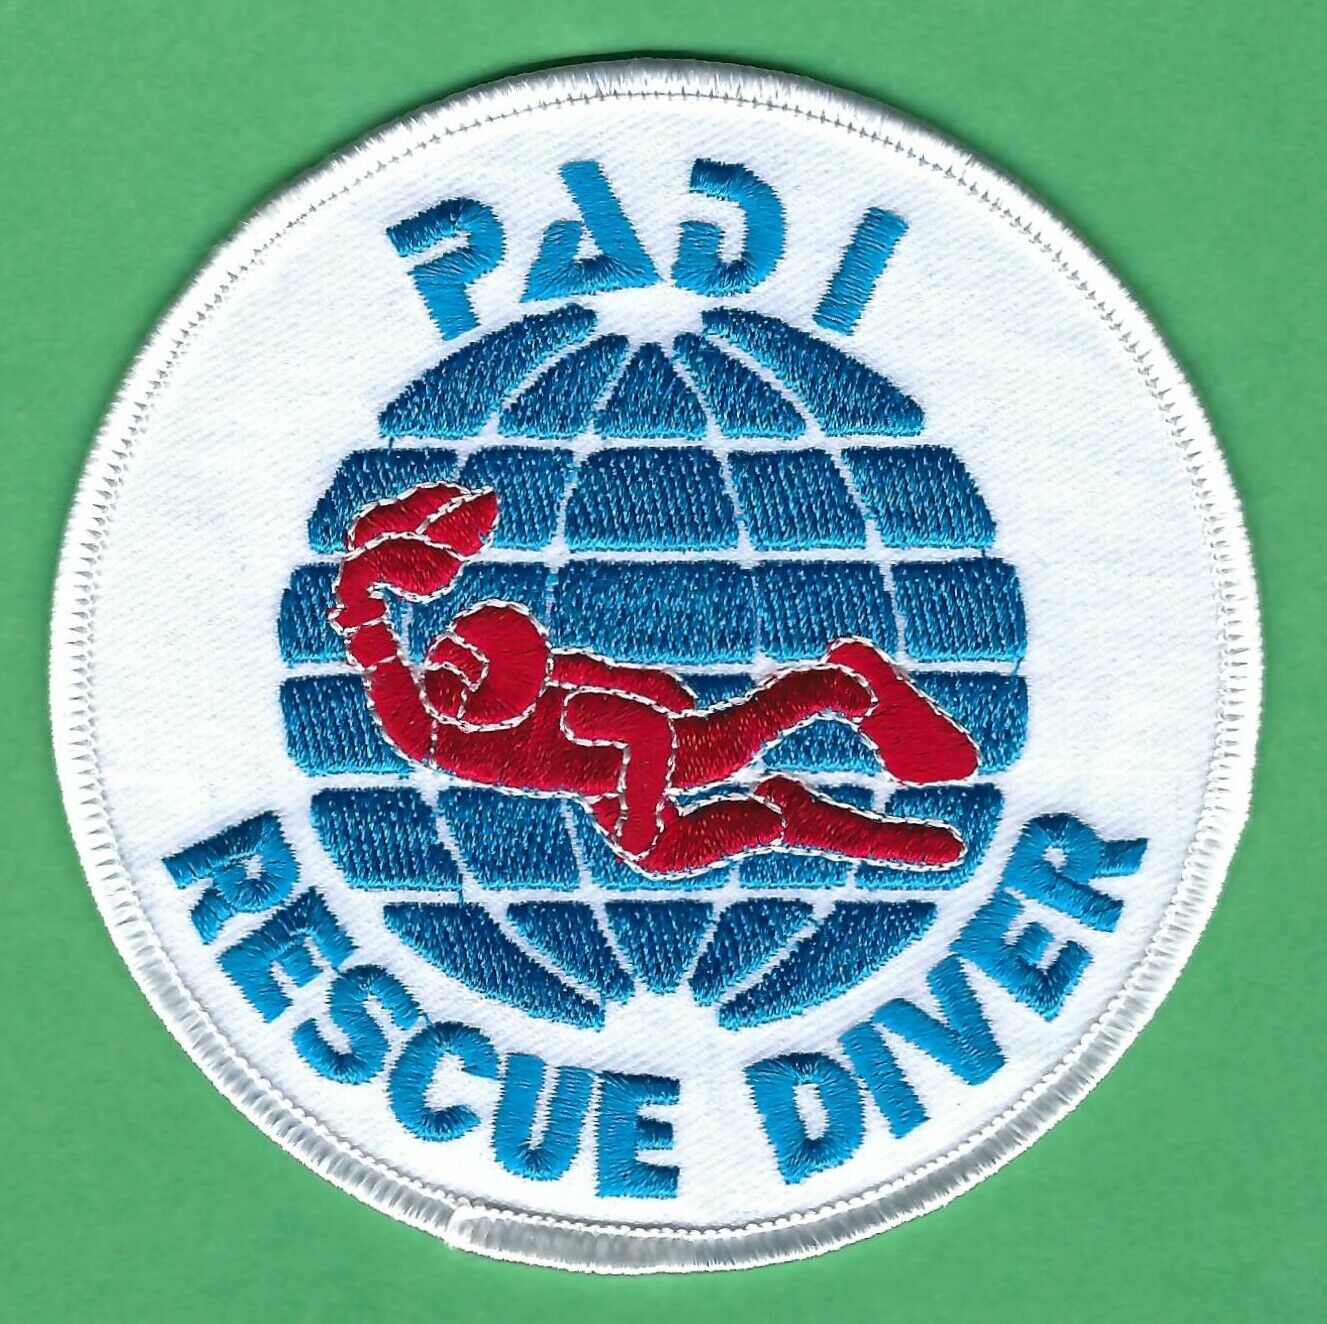 Padi Professional Association Of Dive Instructors Rescue Diver Patch